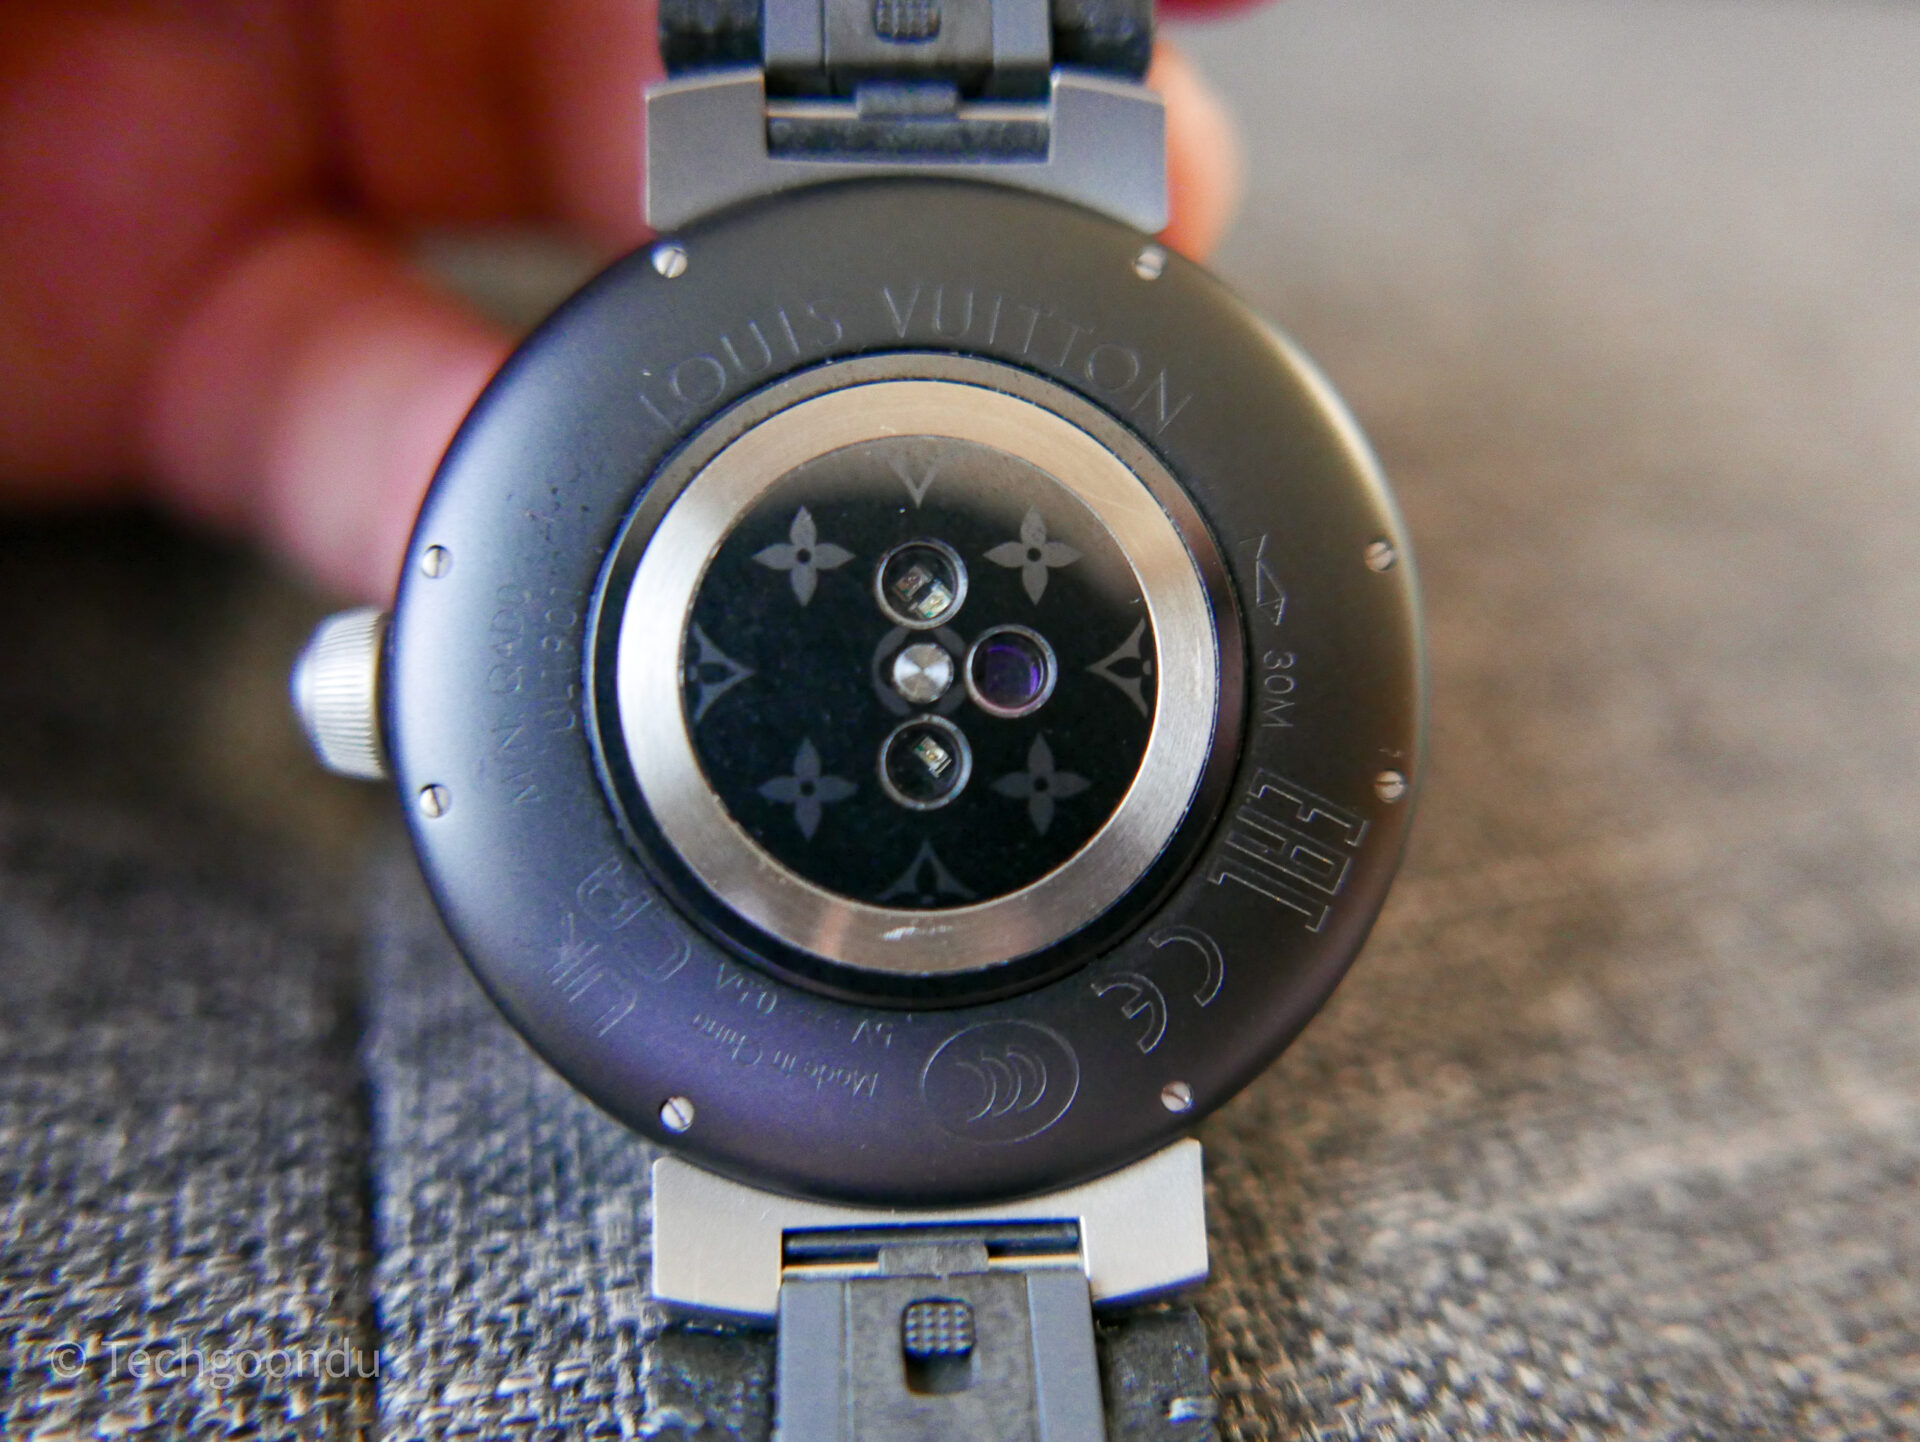 Louis Vuitton Debuts Tambour Horizon Light Up Smartwatch